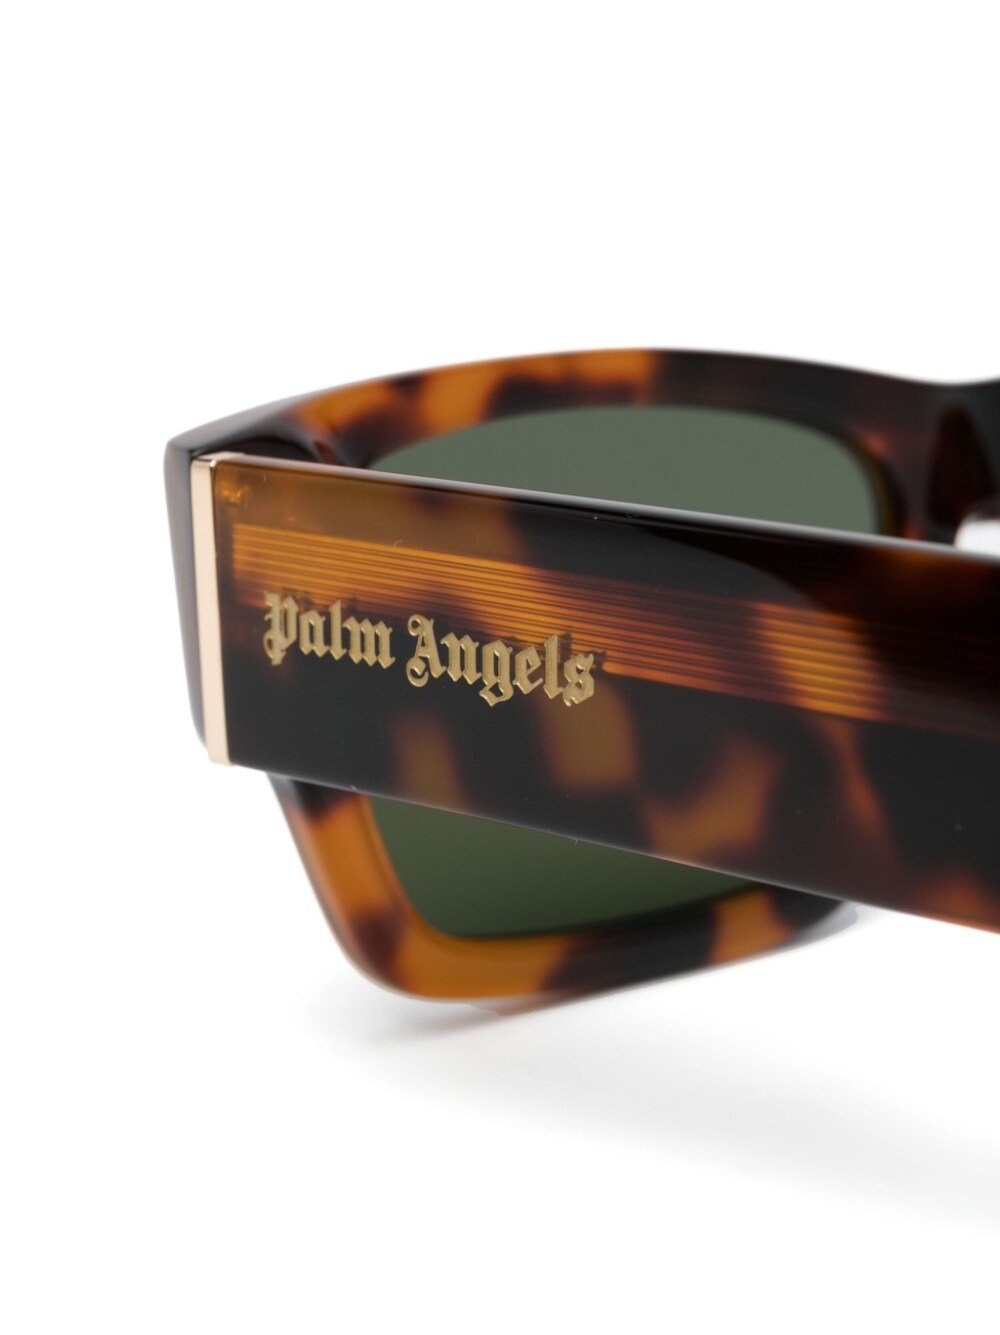 Palm AngelsMurray Sunglasses at Fashion Clinic